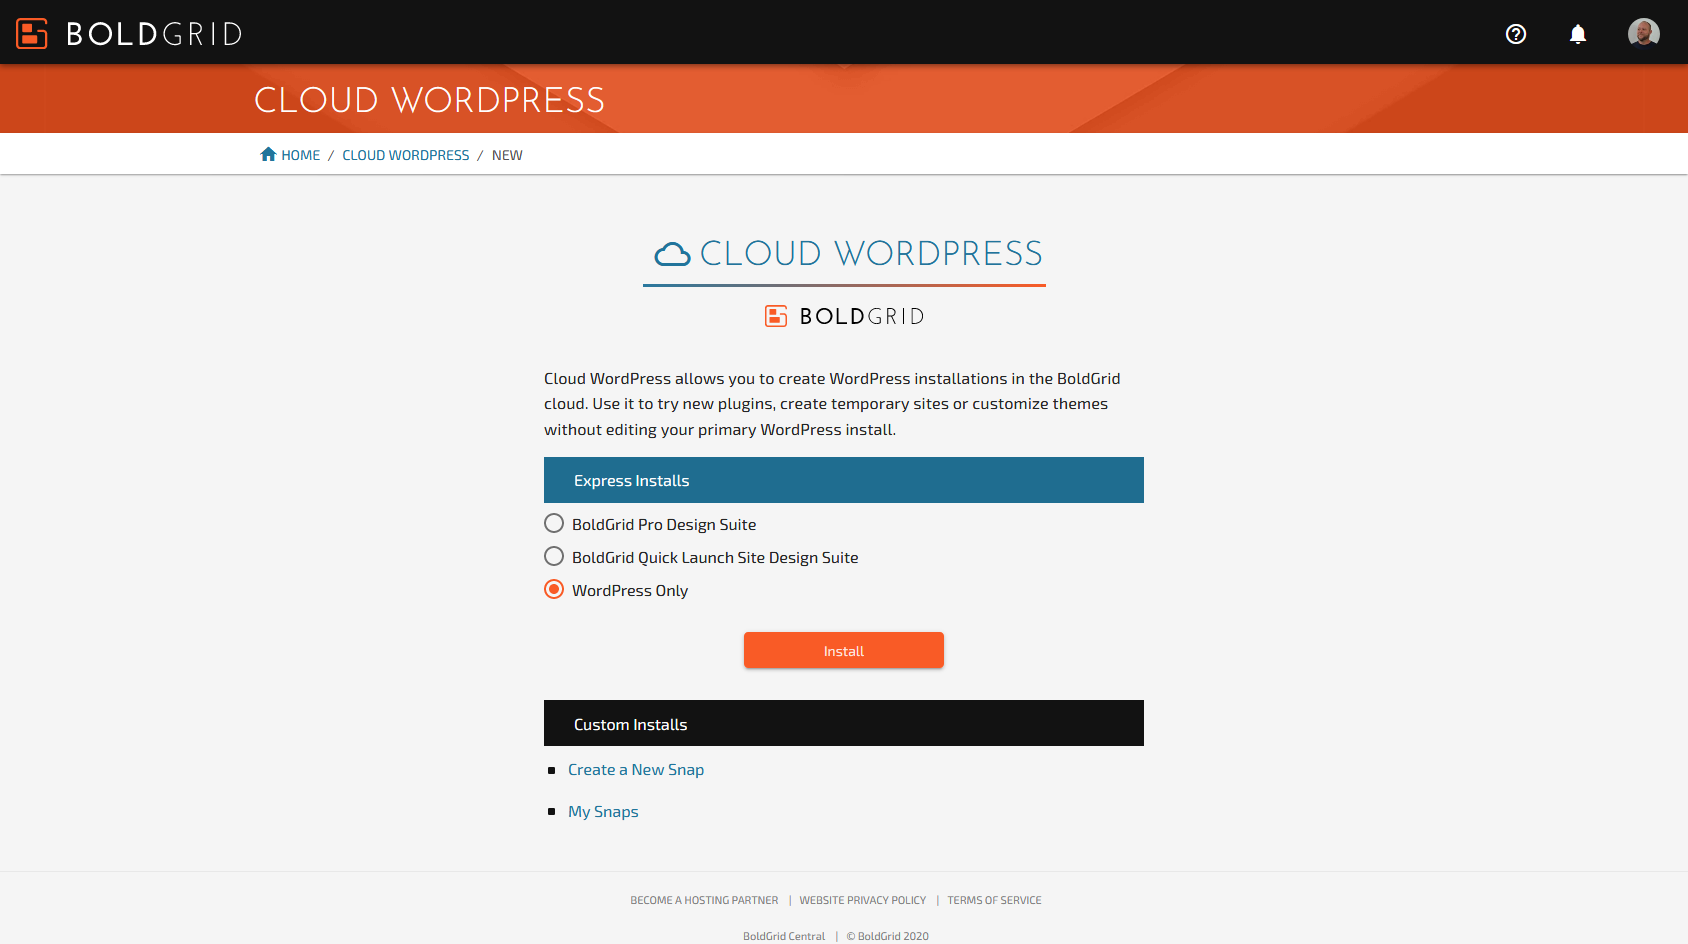 Using Cloud WordPress to create site